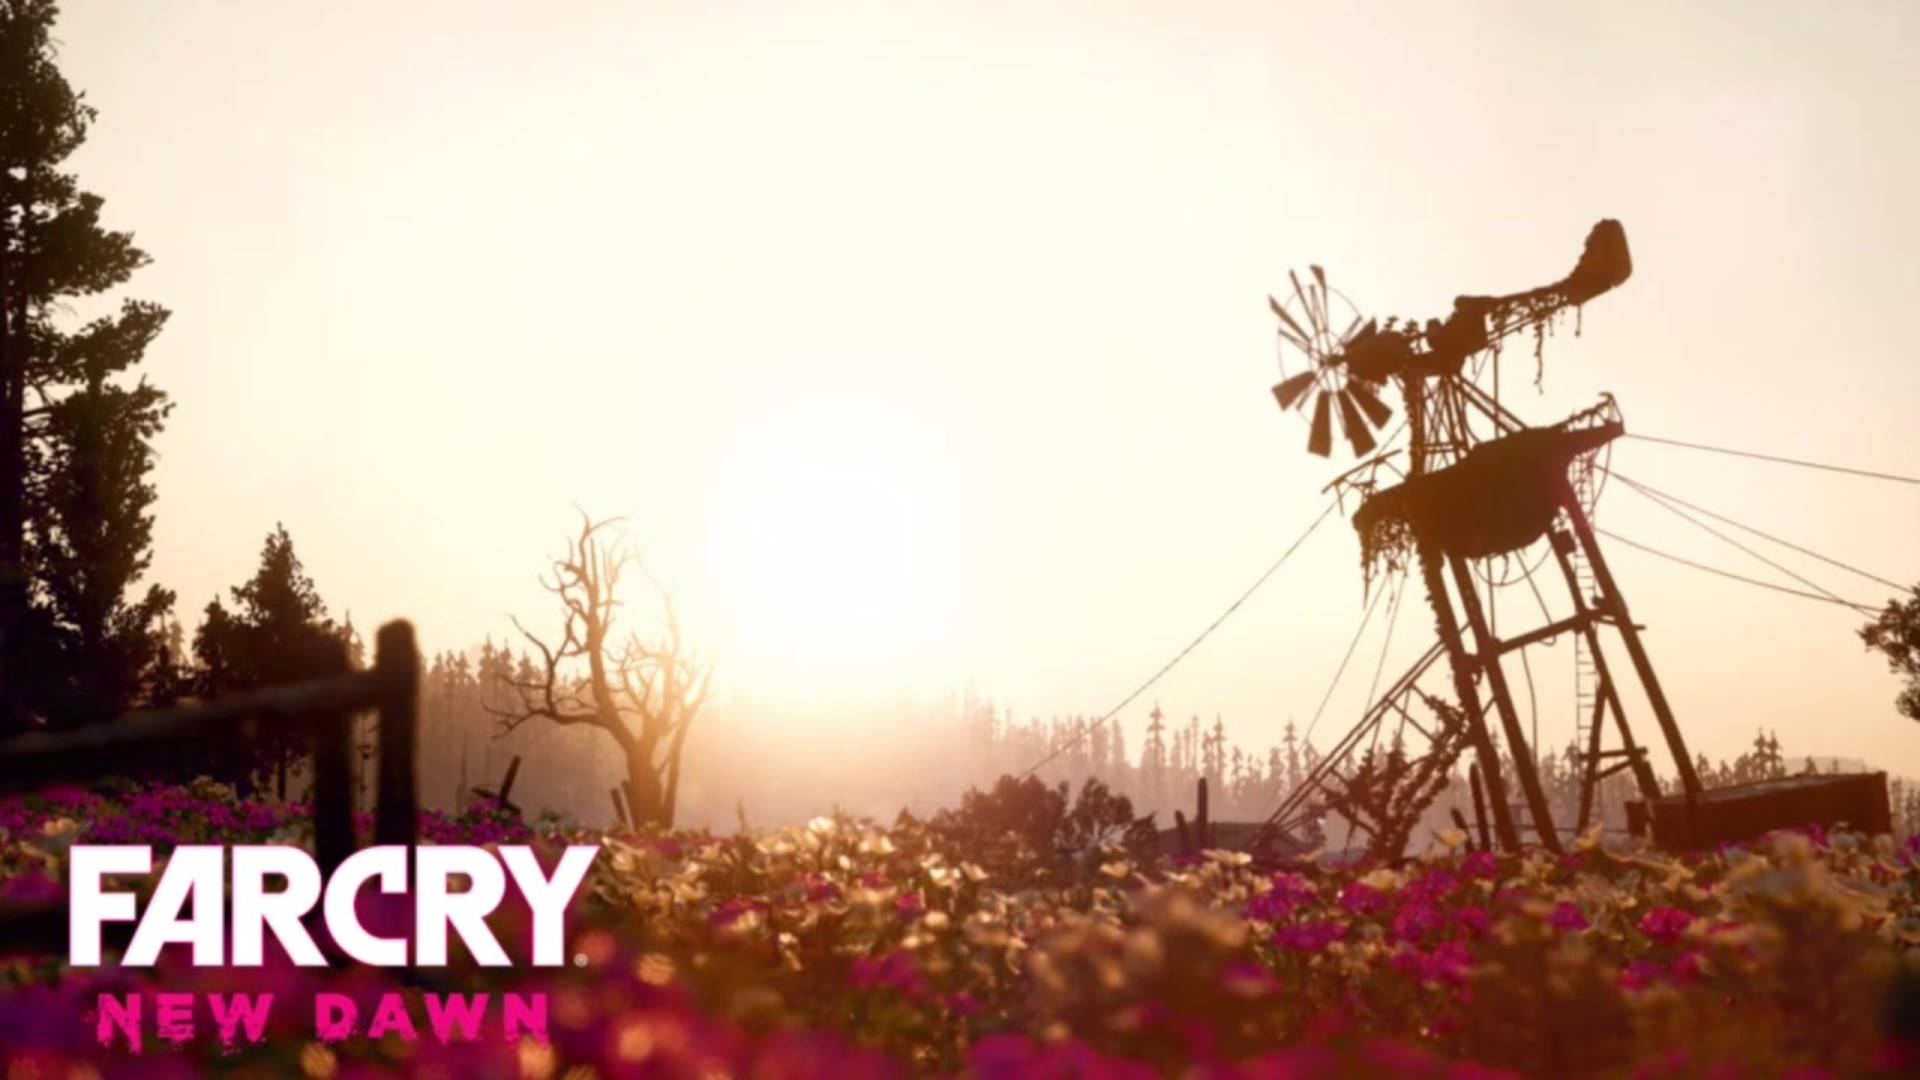 Free Far Cry New Dawn Wallpaper Downloads, [100+] Far Cry New Dawn  Wallpapers for FREE 